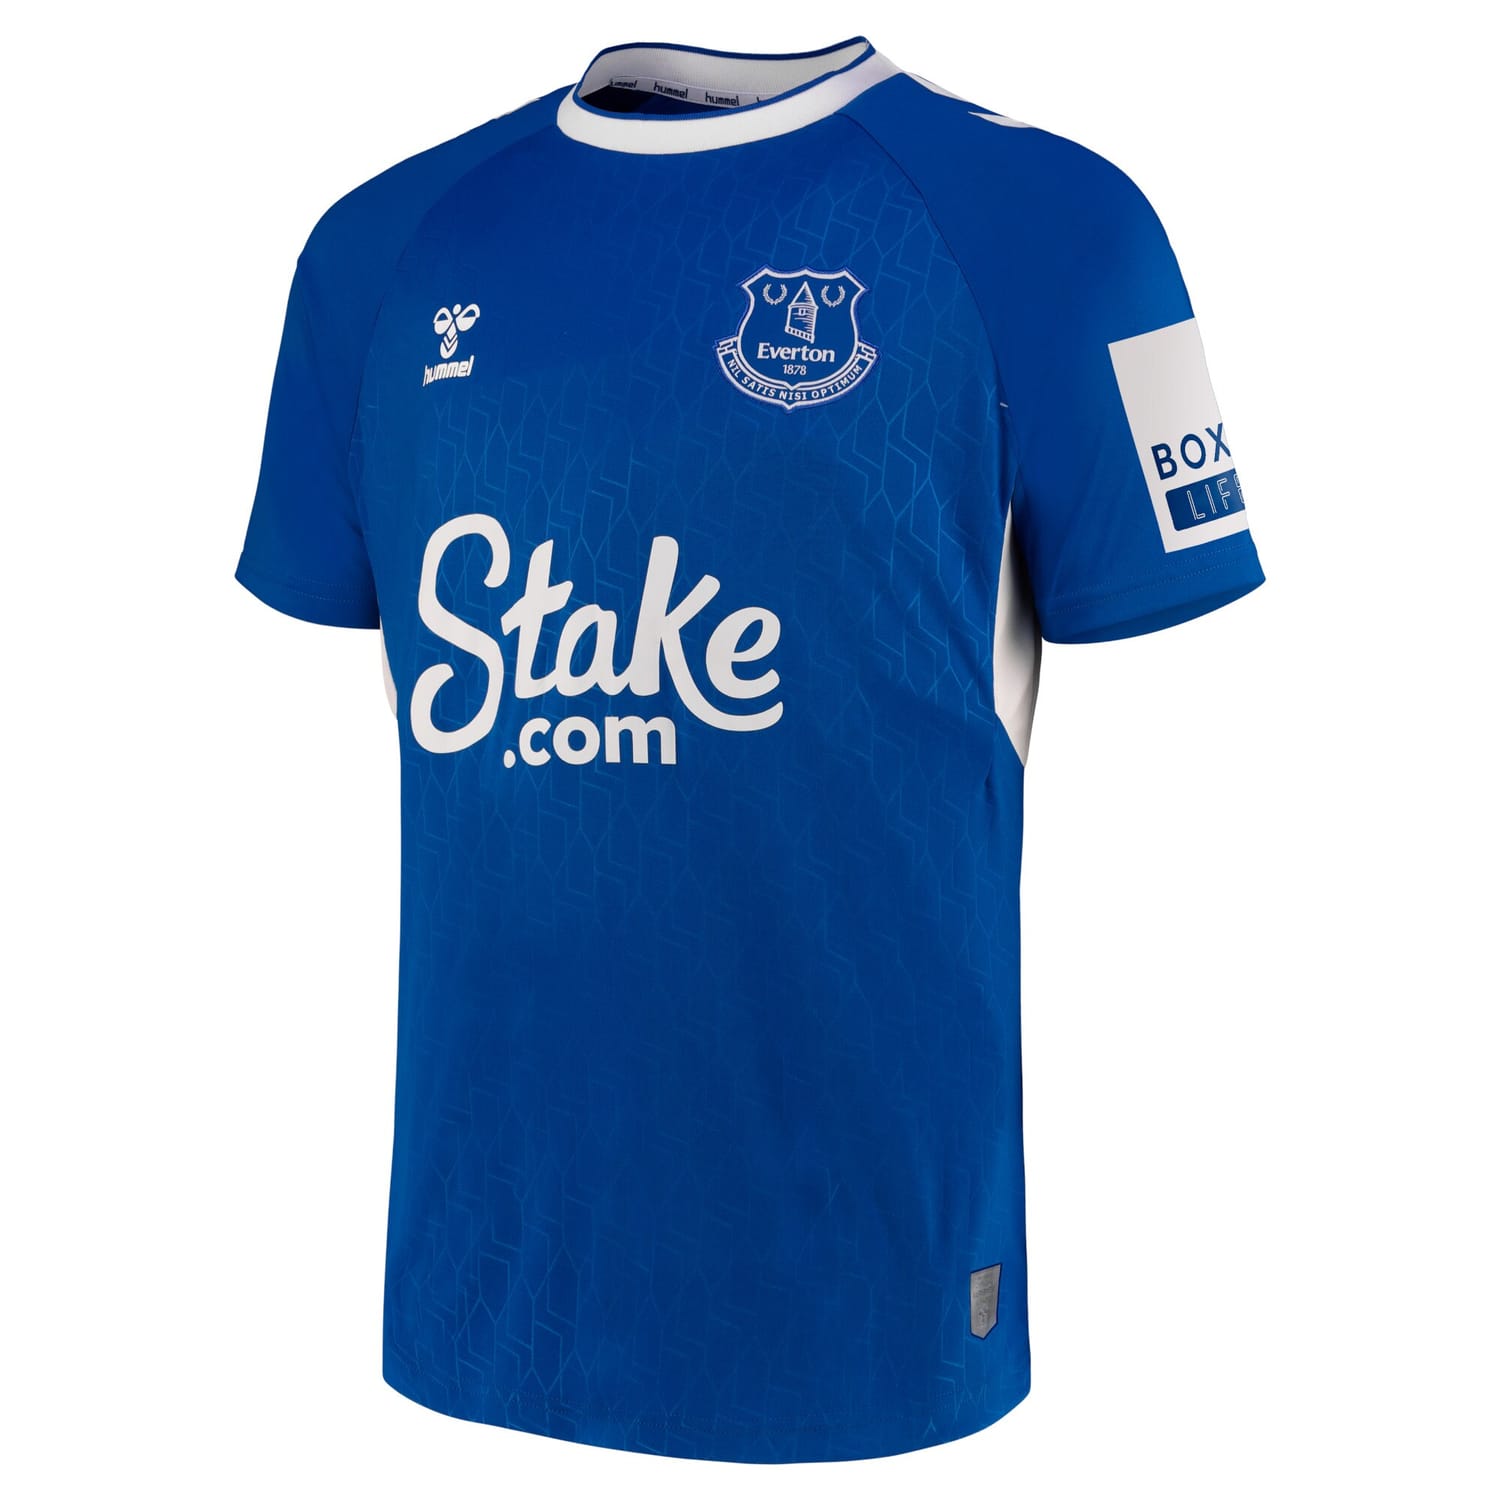 Premier League Everton Home WSL Jersey Shirt 2022-23 player Elise Stenevik 27 printing for Men